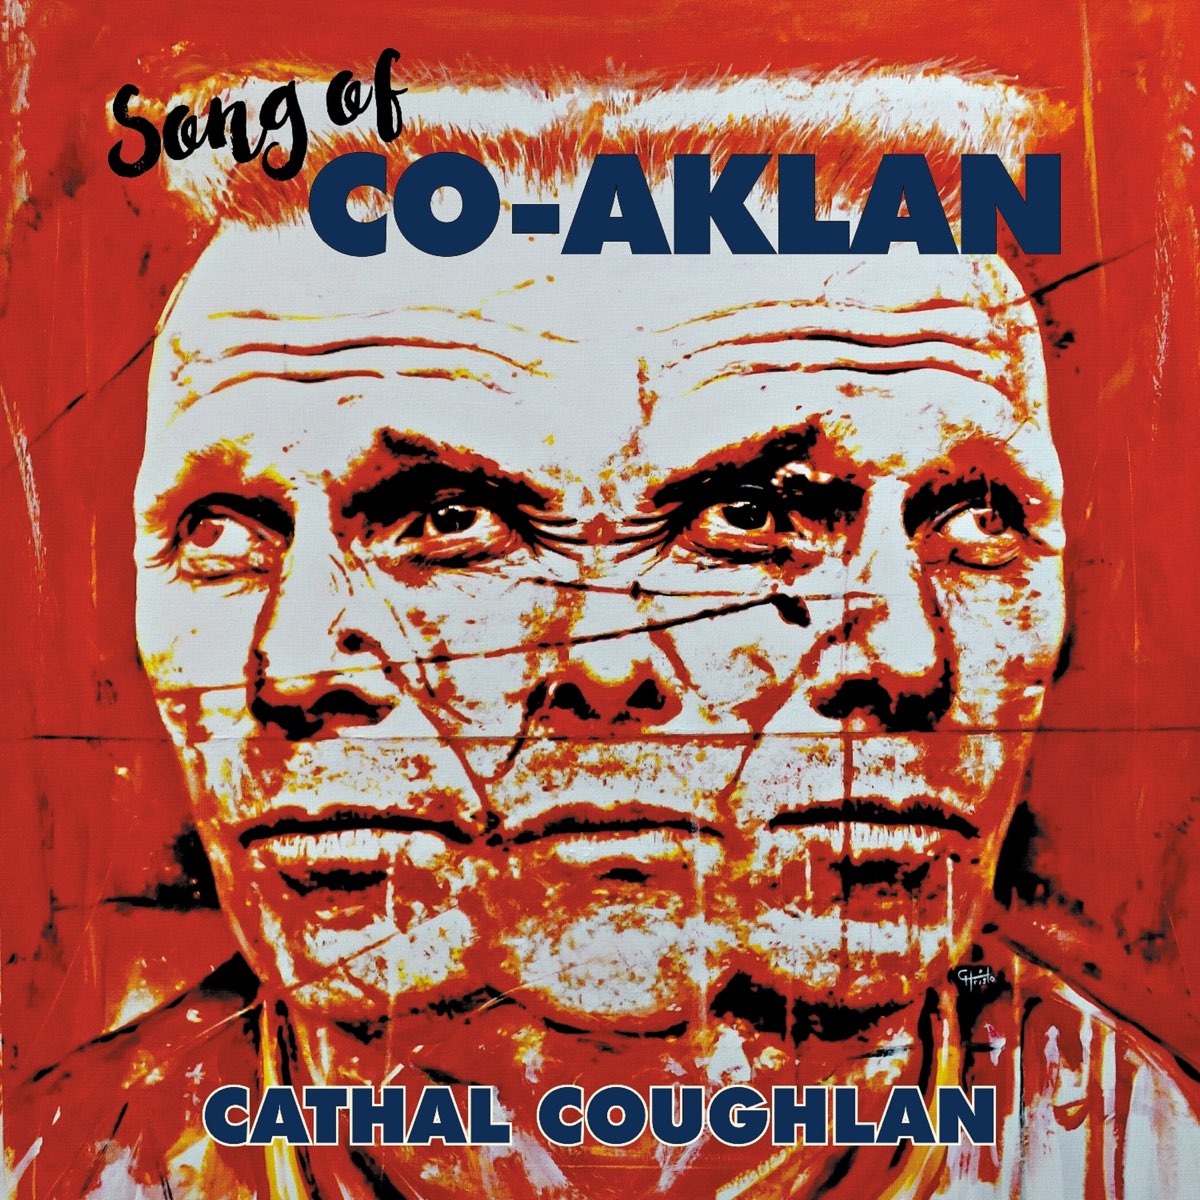 Coughlan, Cathal: Song Of Co-Aklan (Vinyl LP)